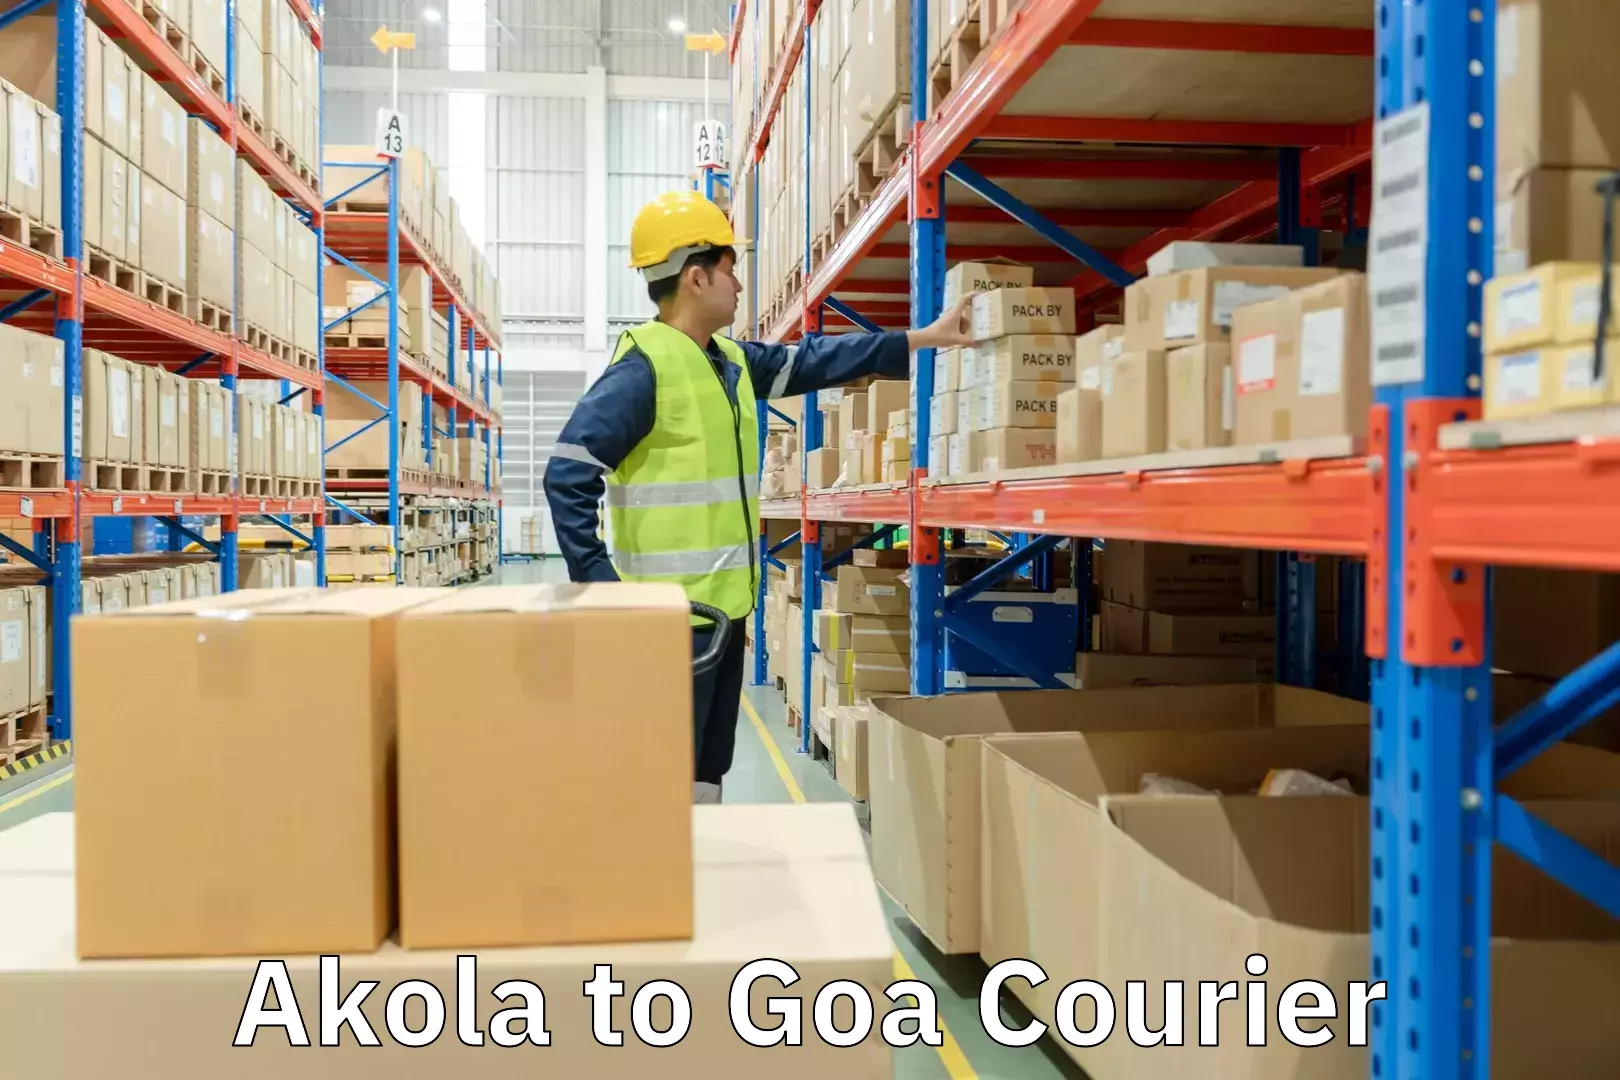 International parcel service Akola to Goa